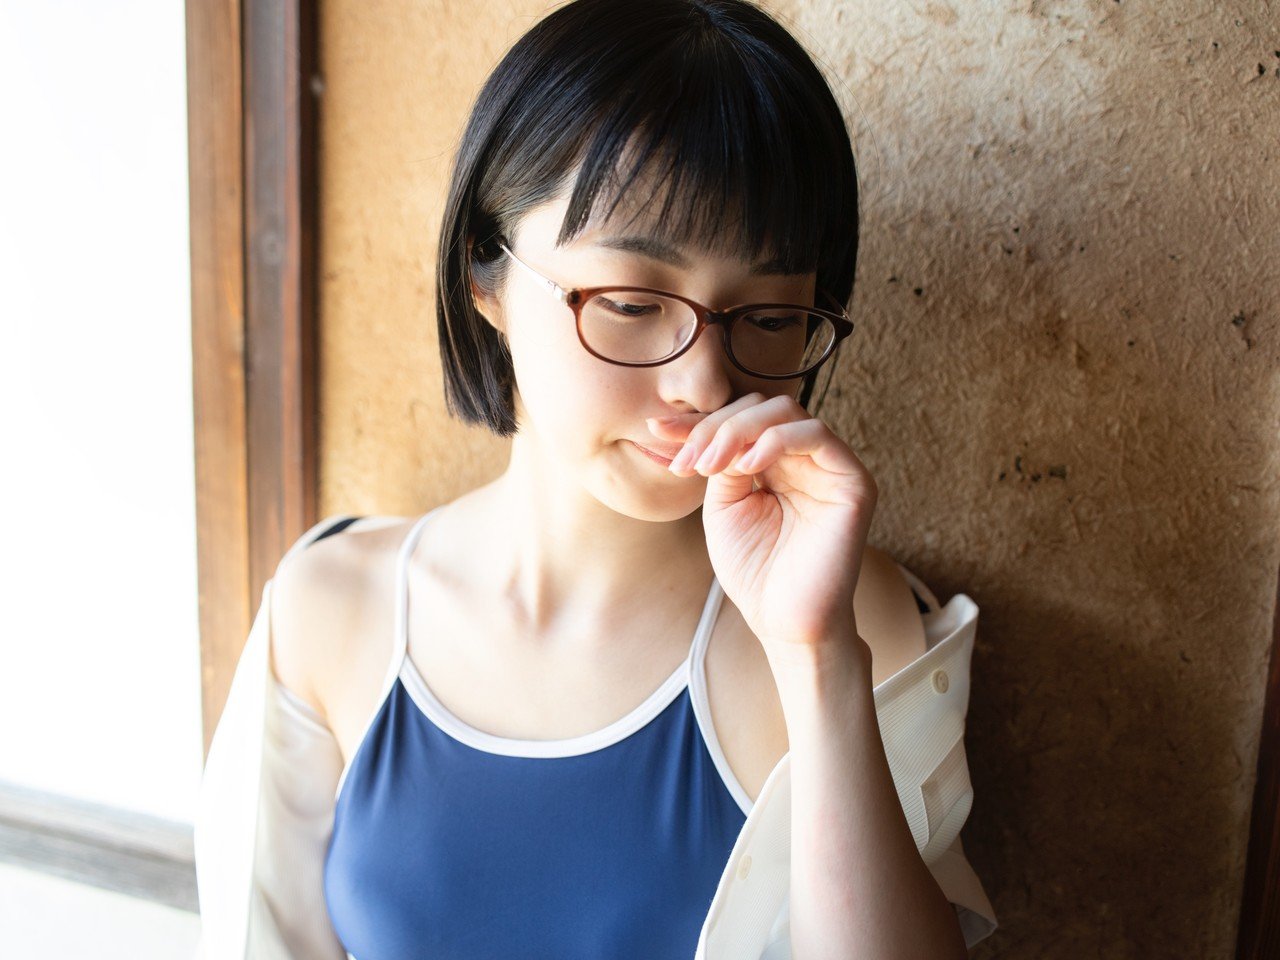 yukikax 少女 tan (jin28tan28) - Profile | Pinterest